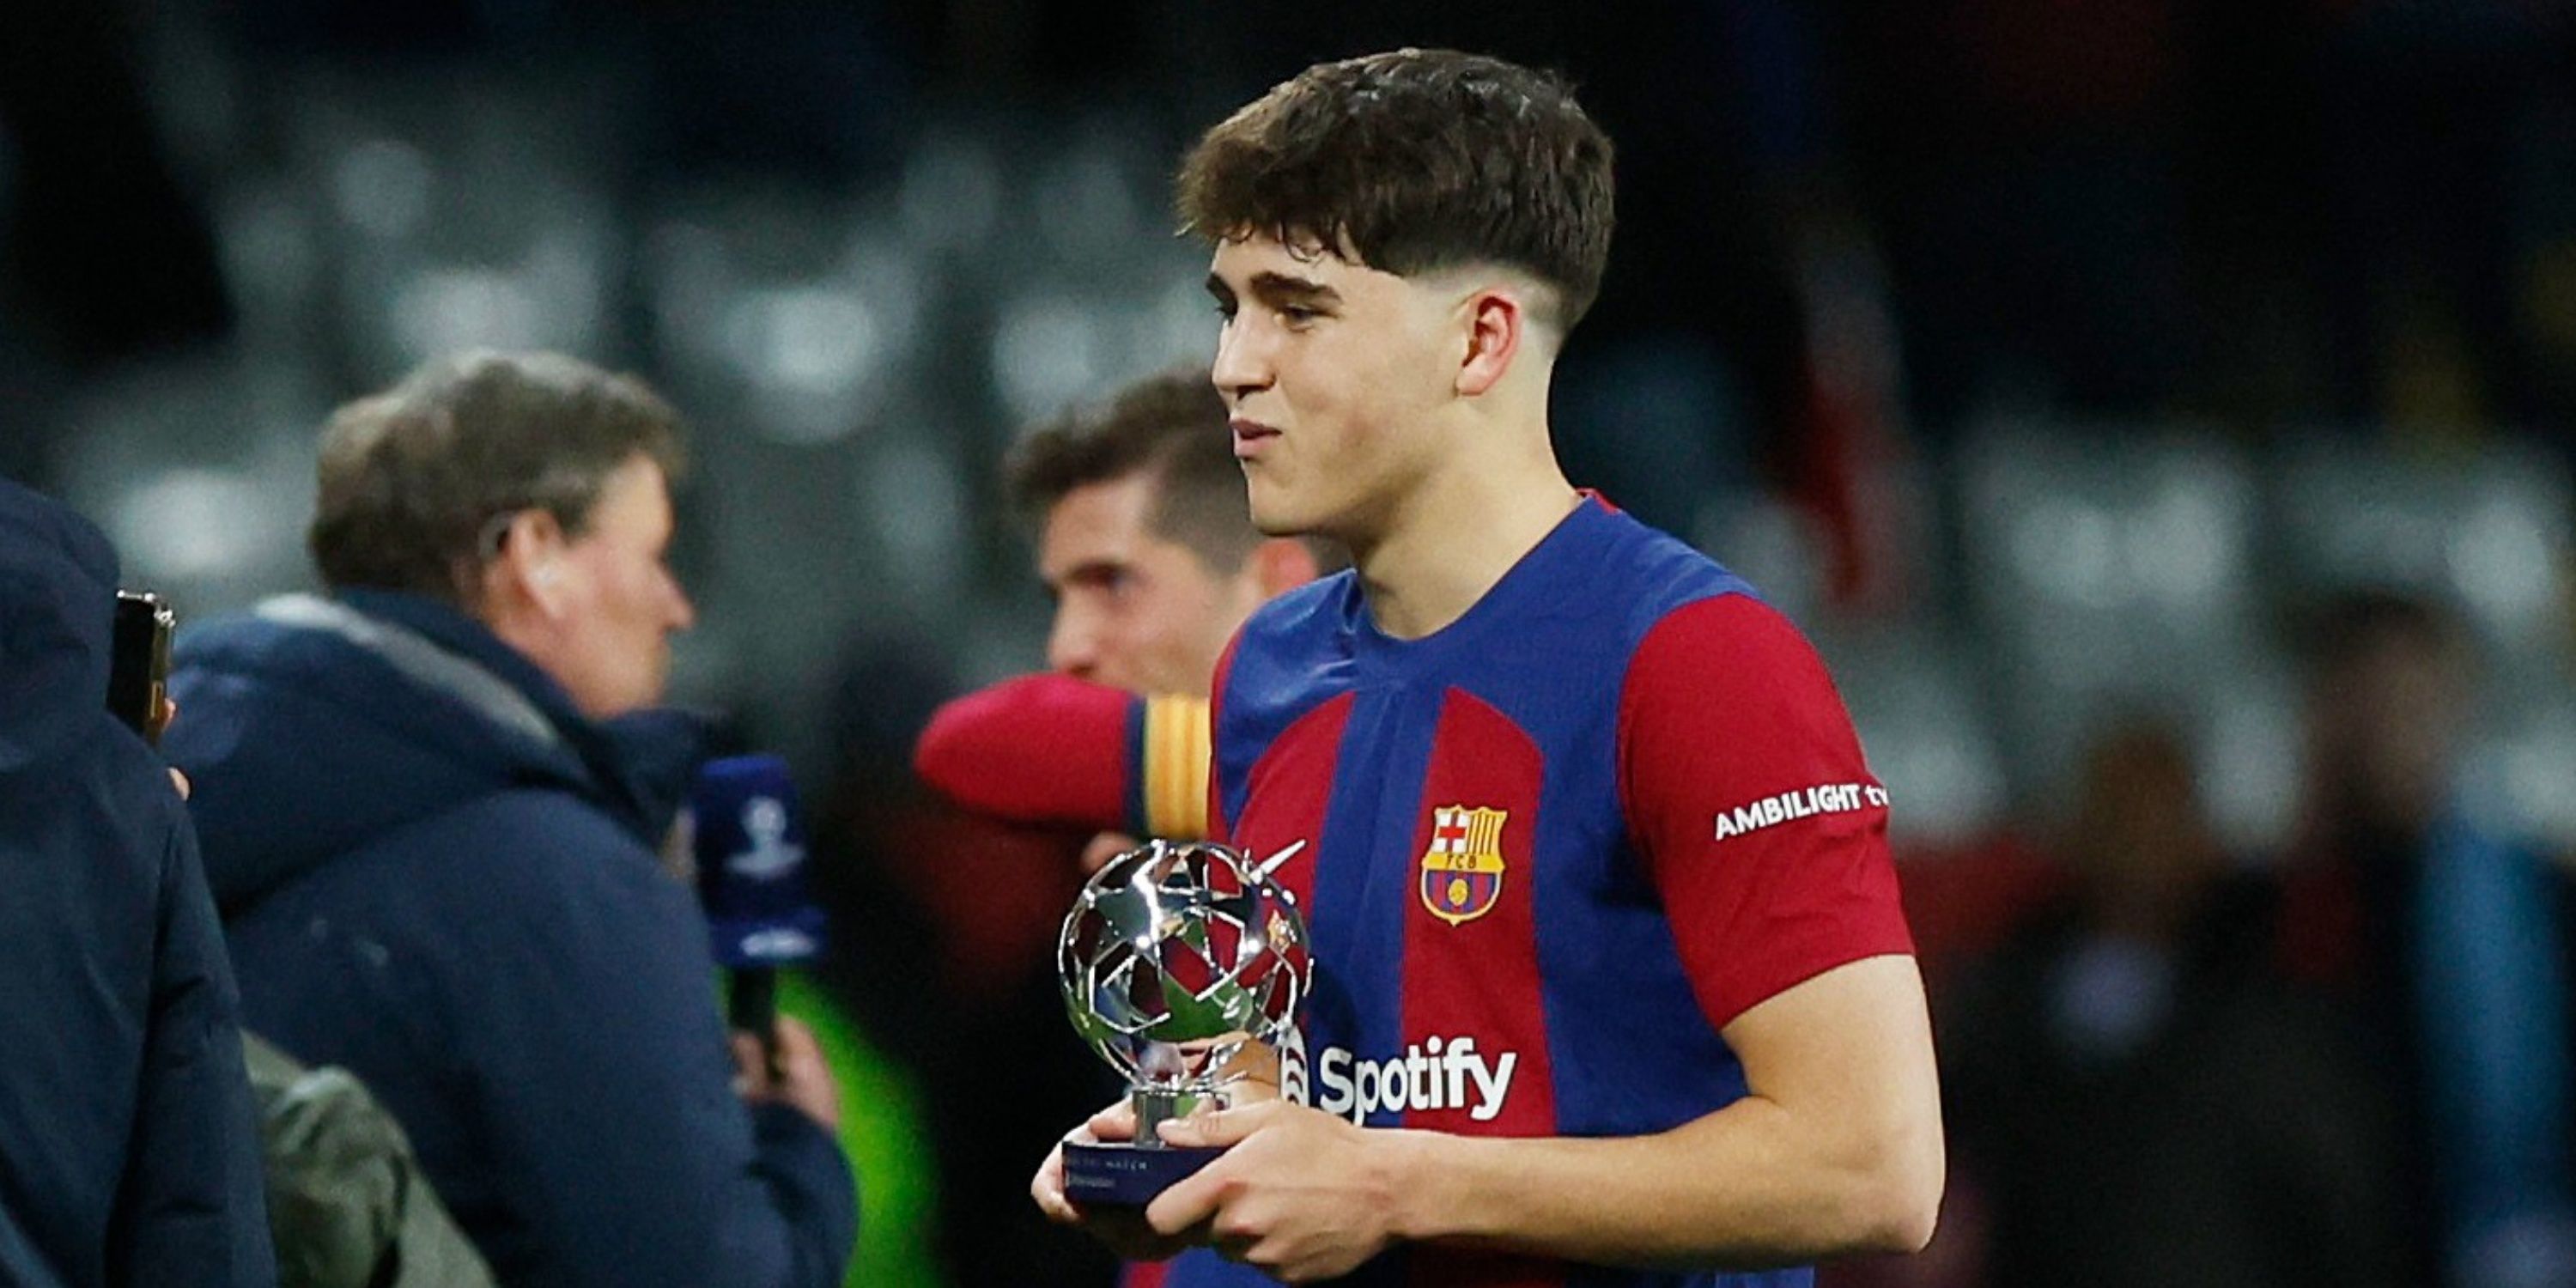 Pau Cubarsi holding a trophy for Barcelona